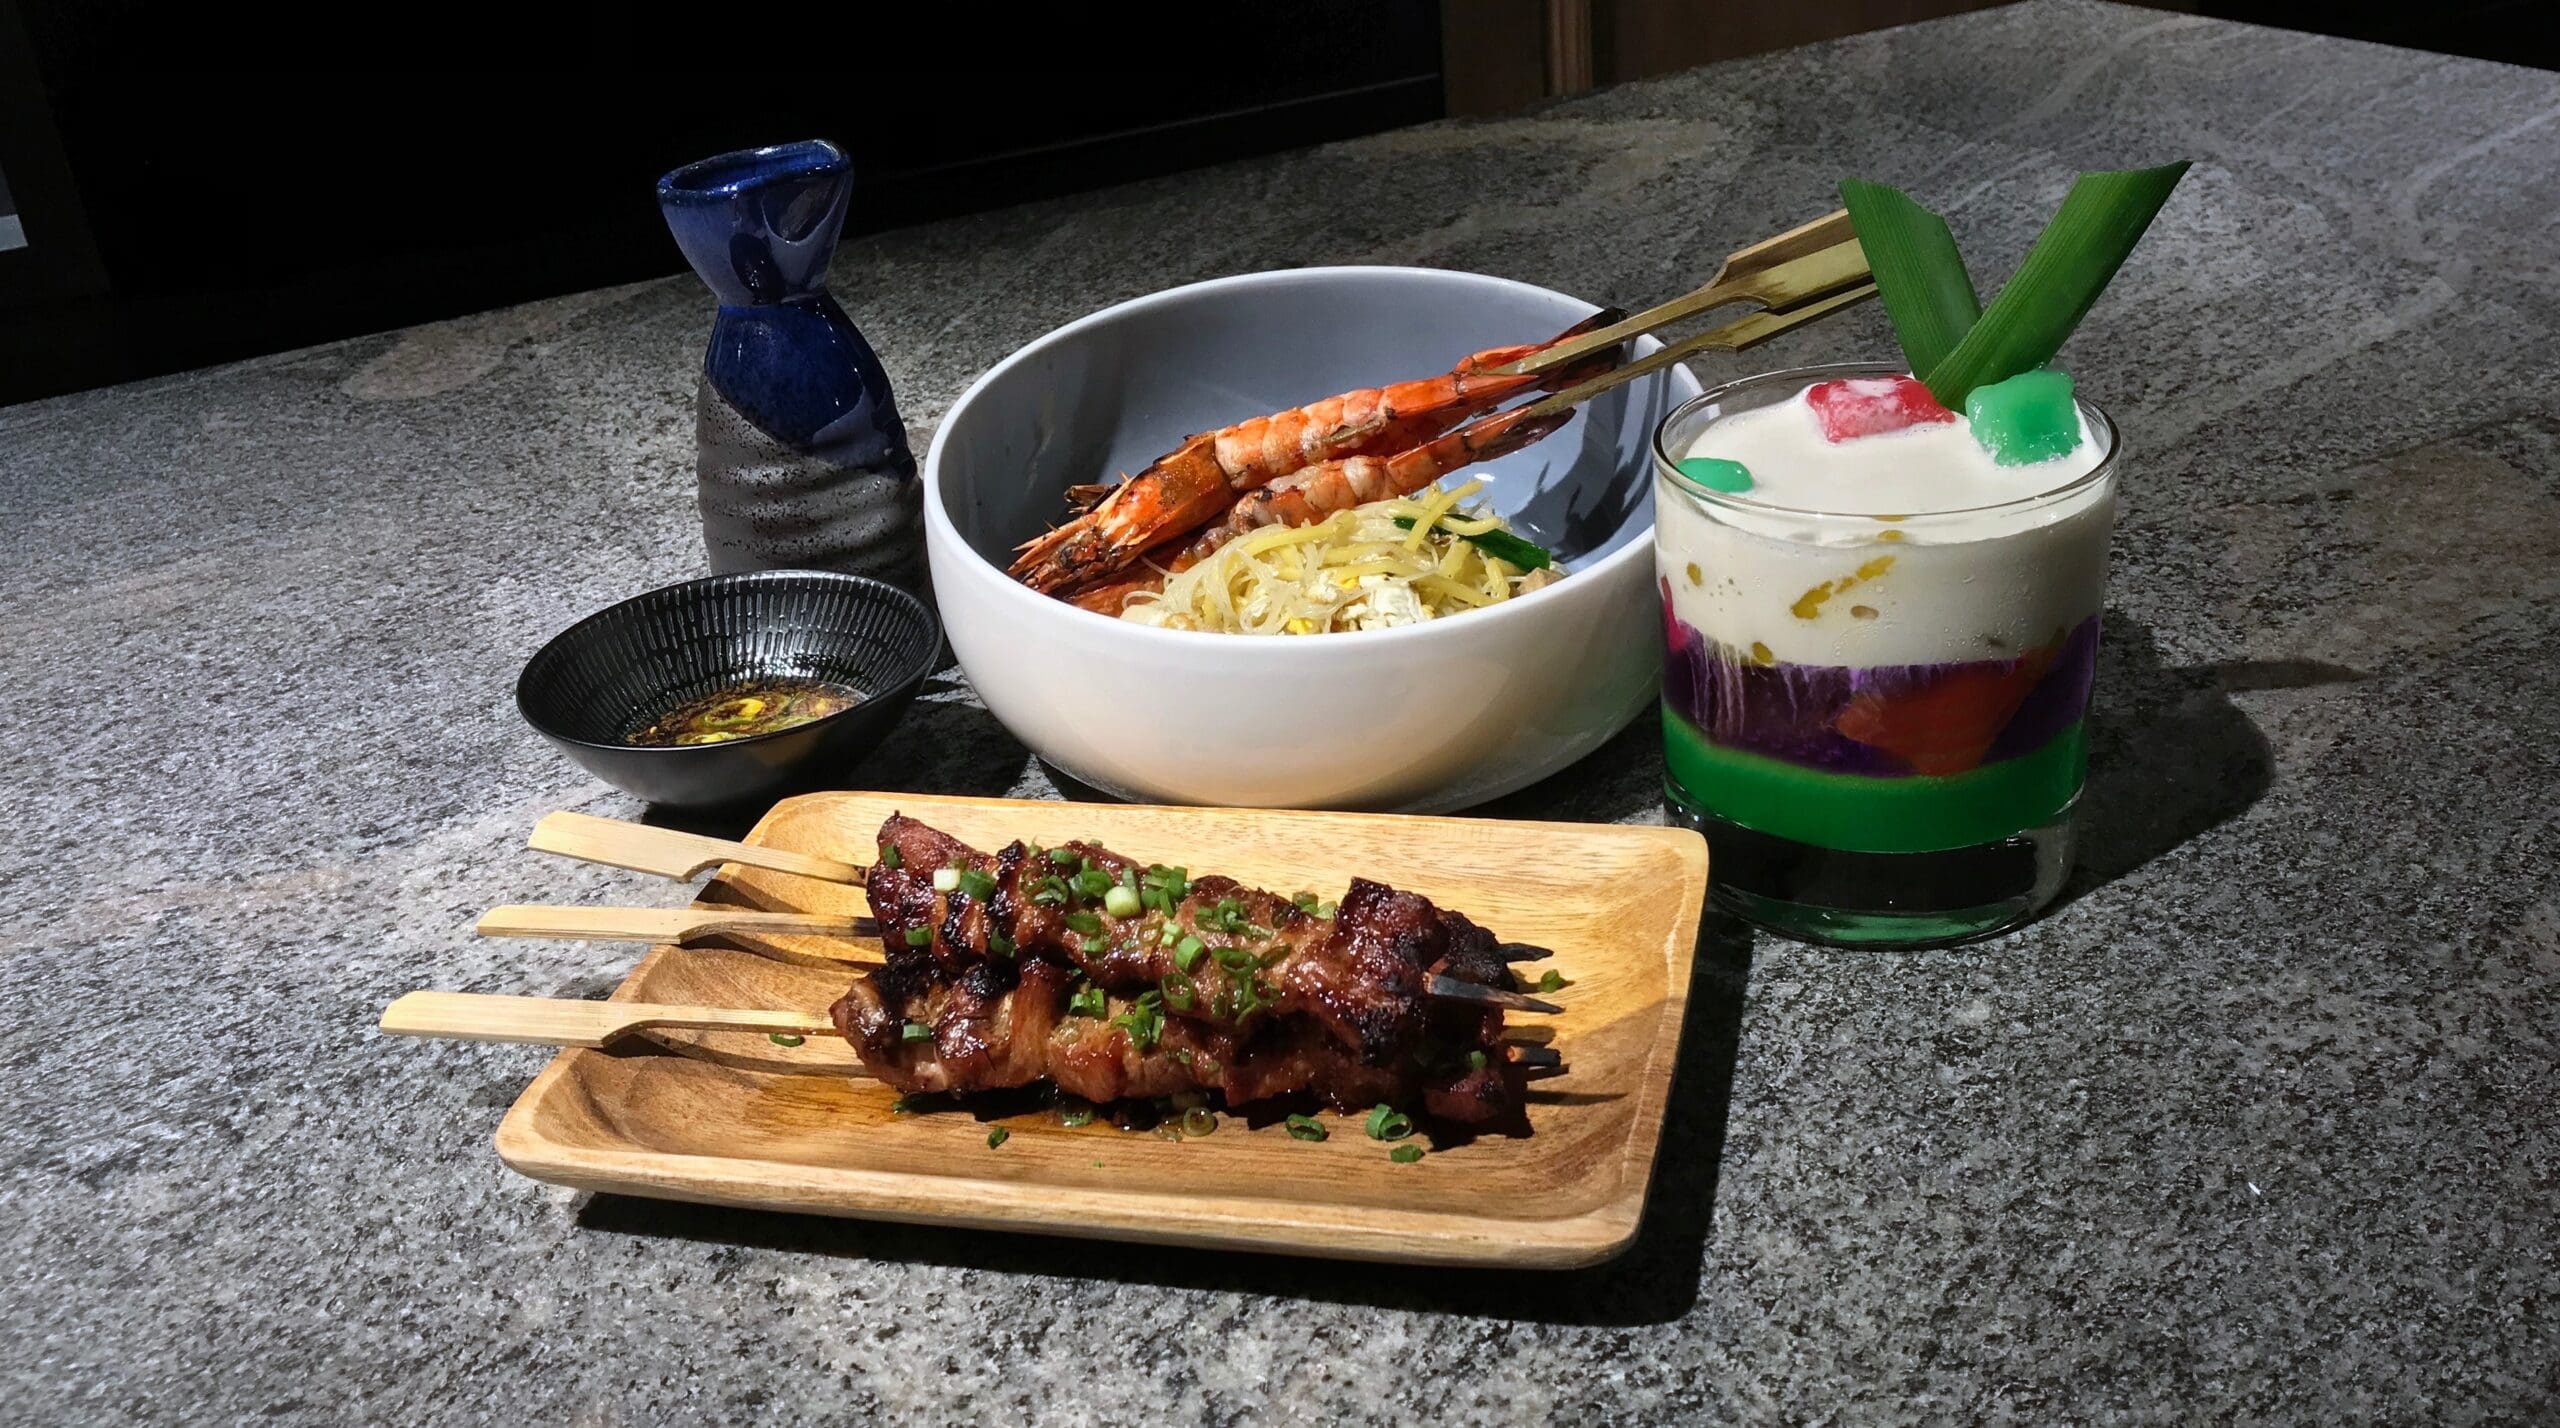 Le Binchotan: Supper—Hokkien Mee with Binchotan-Grilled Tiger Prawns